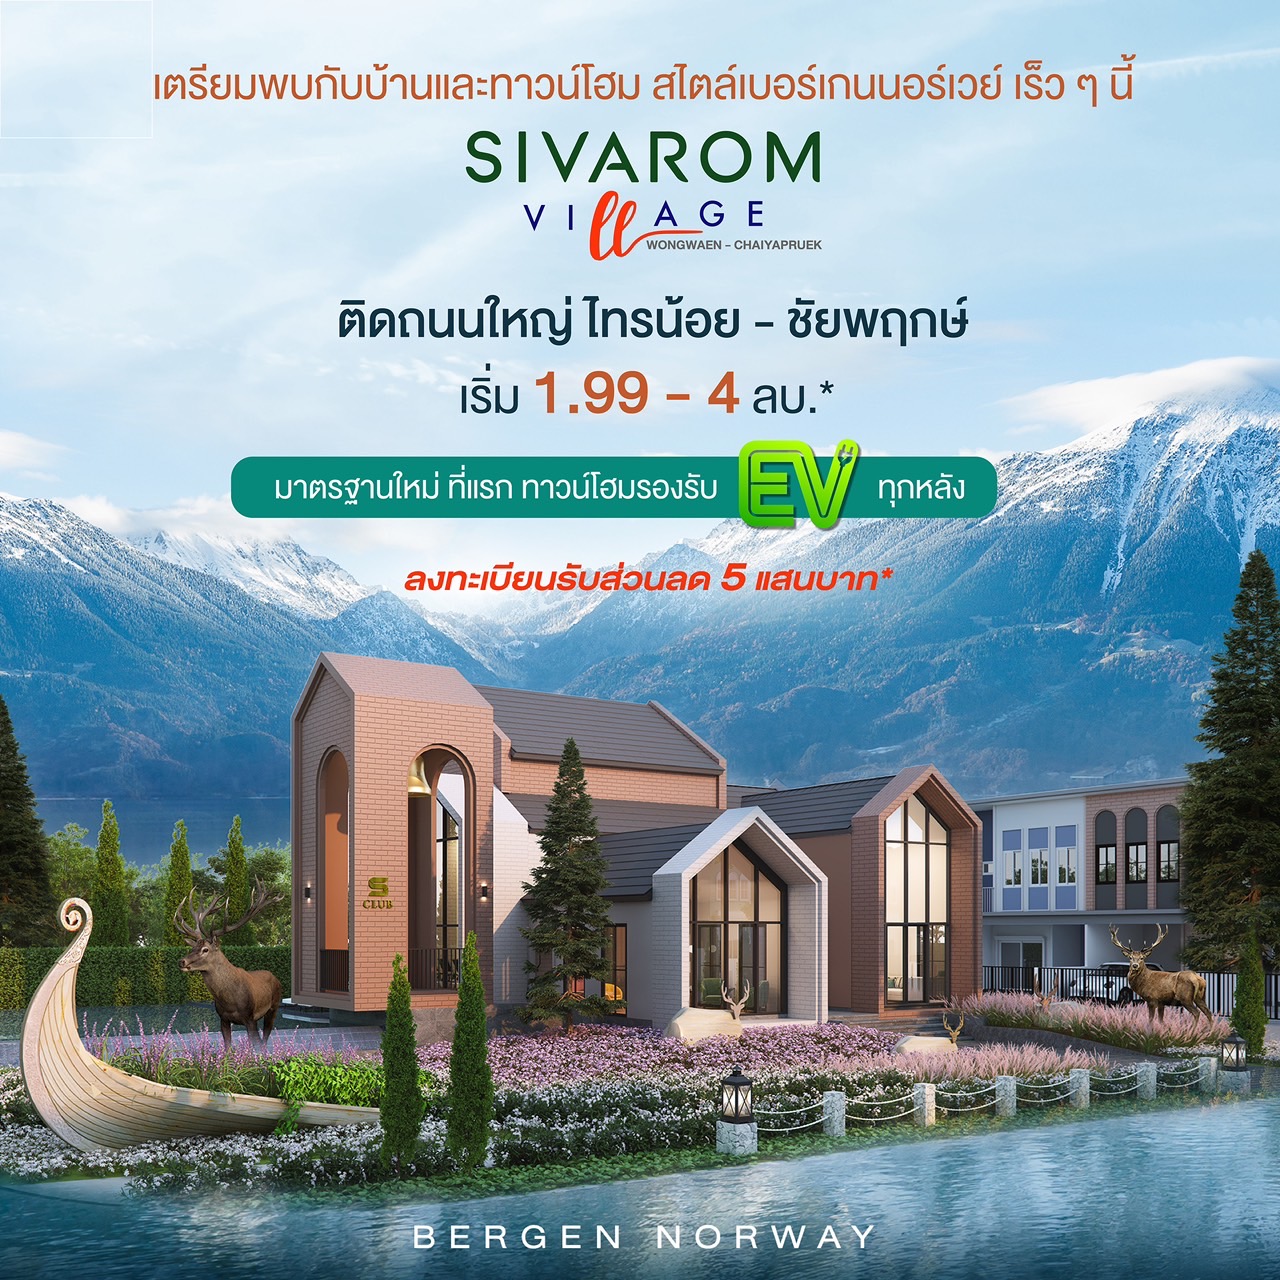 Sivarom Village Ad